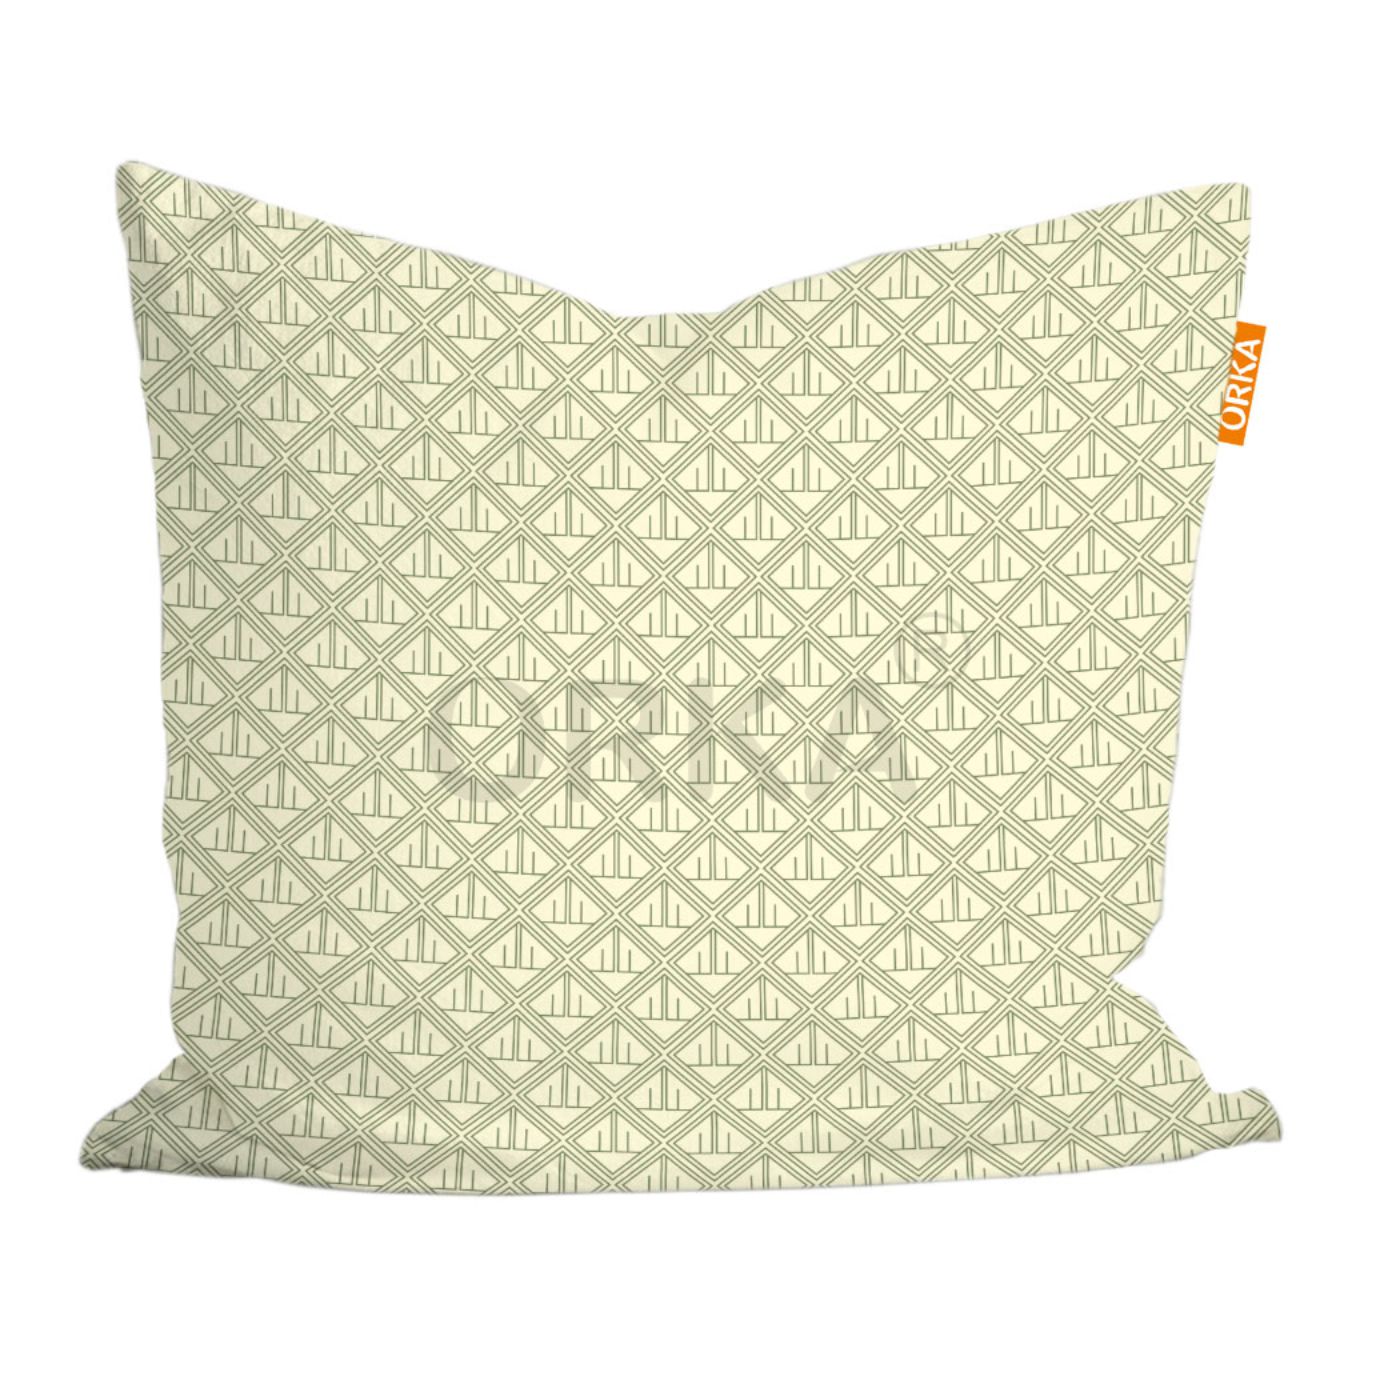 ORKA Digital Printed Cushion 2 14"x14" Cover Only